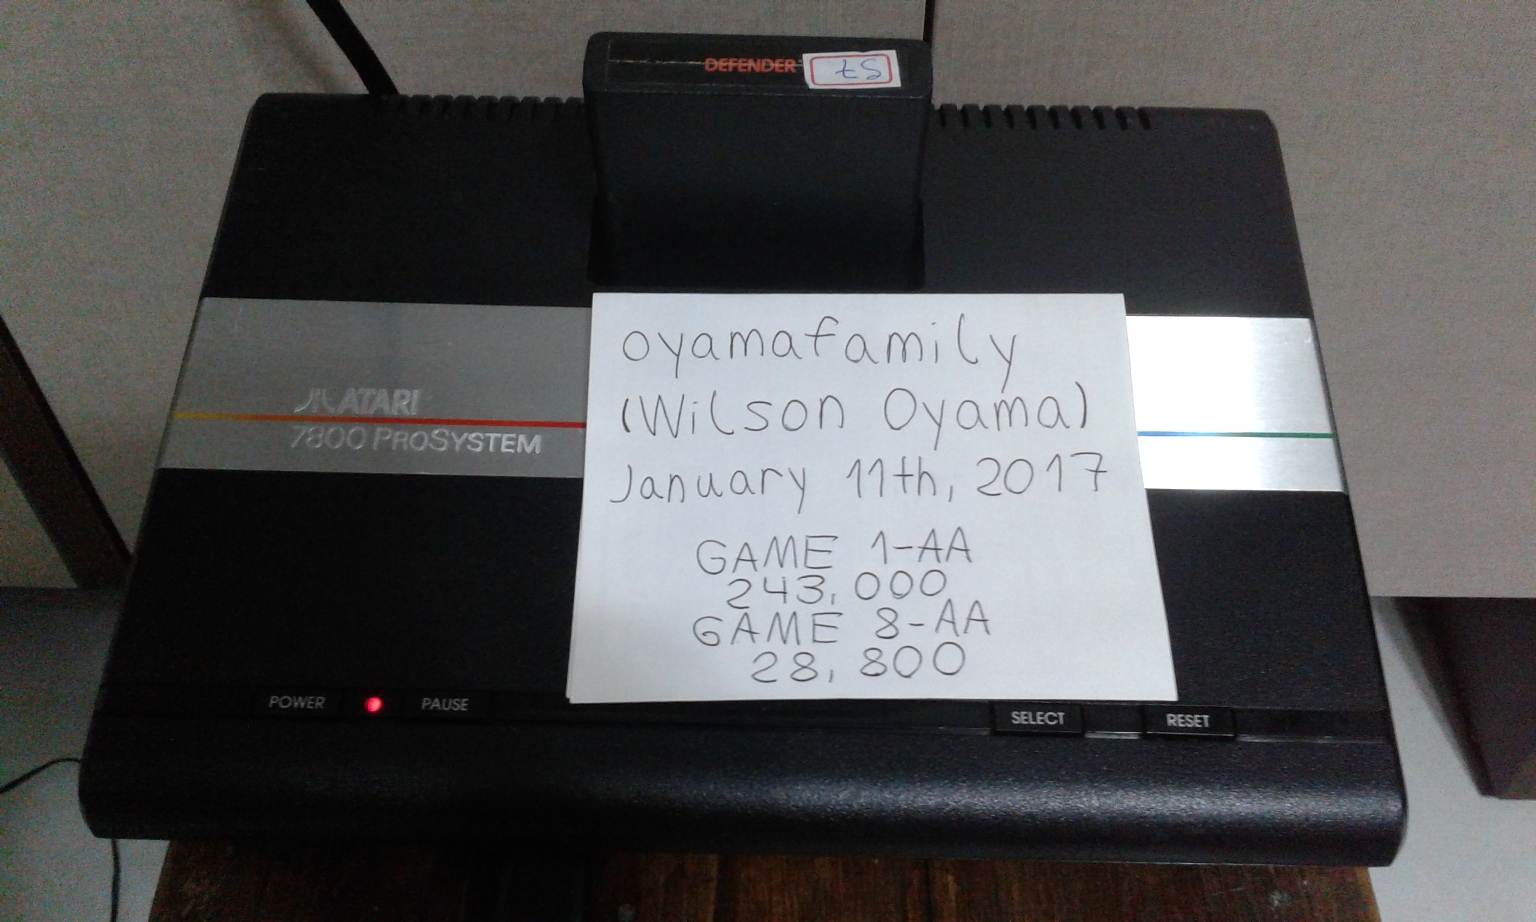 oyamafamily: Defender (Atari 2600 Expert/A) 243,000 points on 2017-01-11 17:13:41